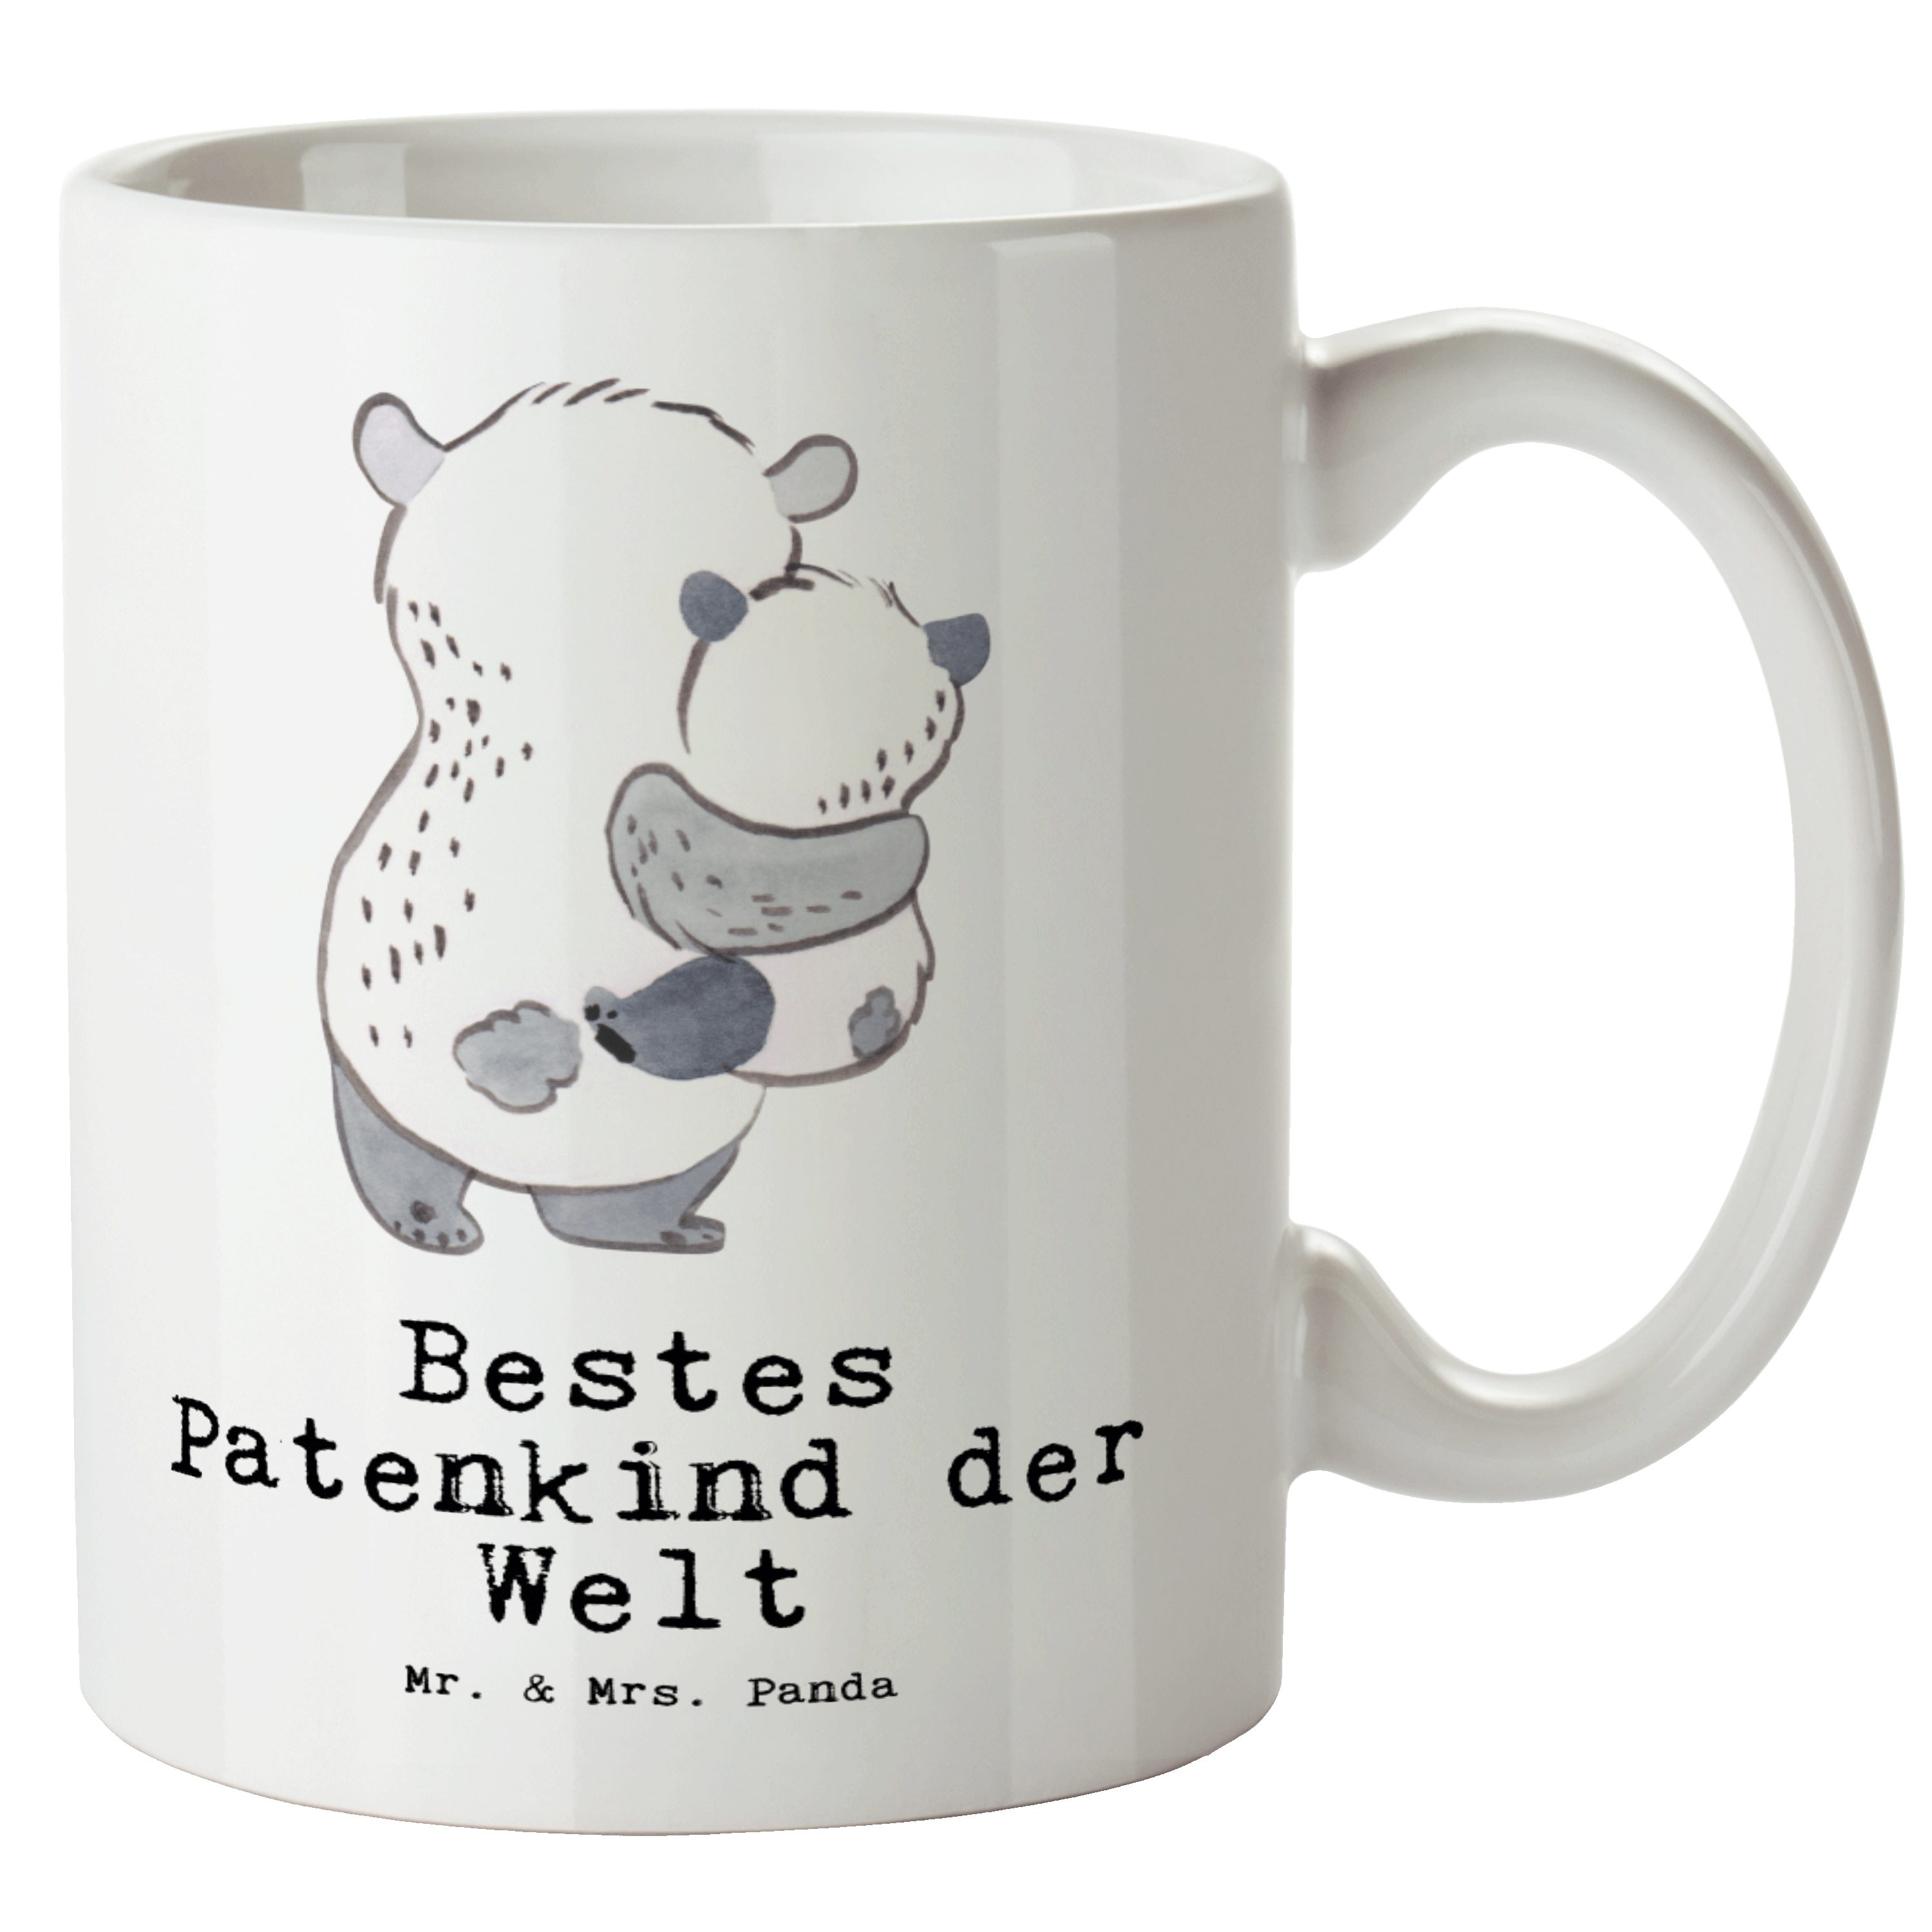 Mr. & Mrs. Panda Tasse Panda Bestes Patenkind der Welt - Weiß - Geschenk, Jumbo Tasse, XL Ta, XL Tasse Keramik